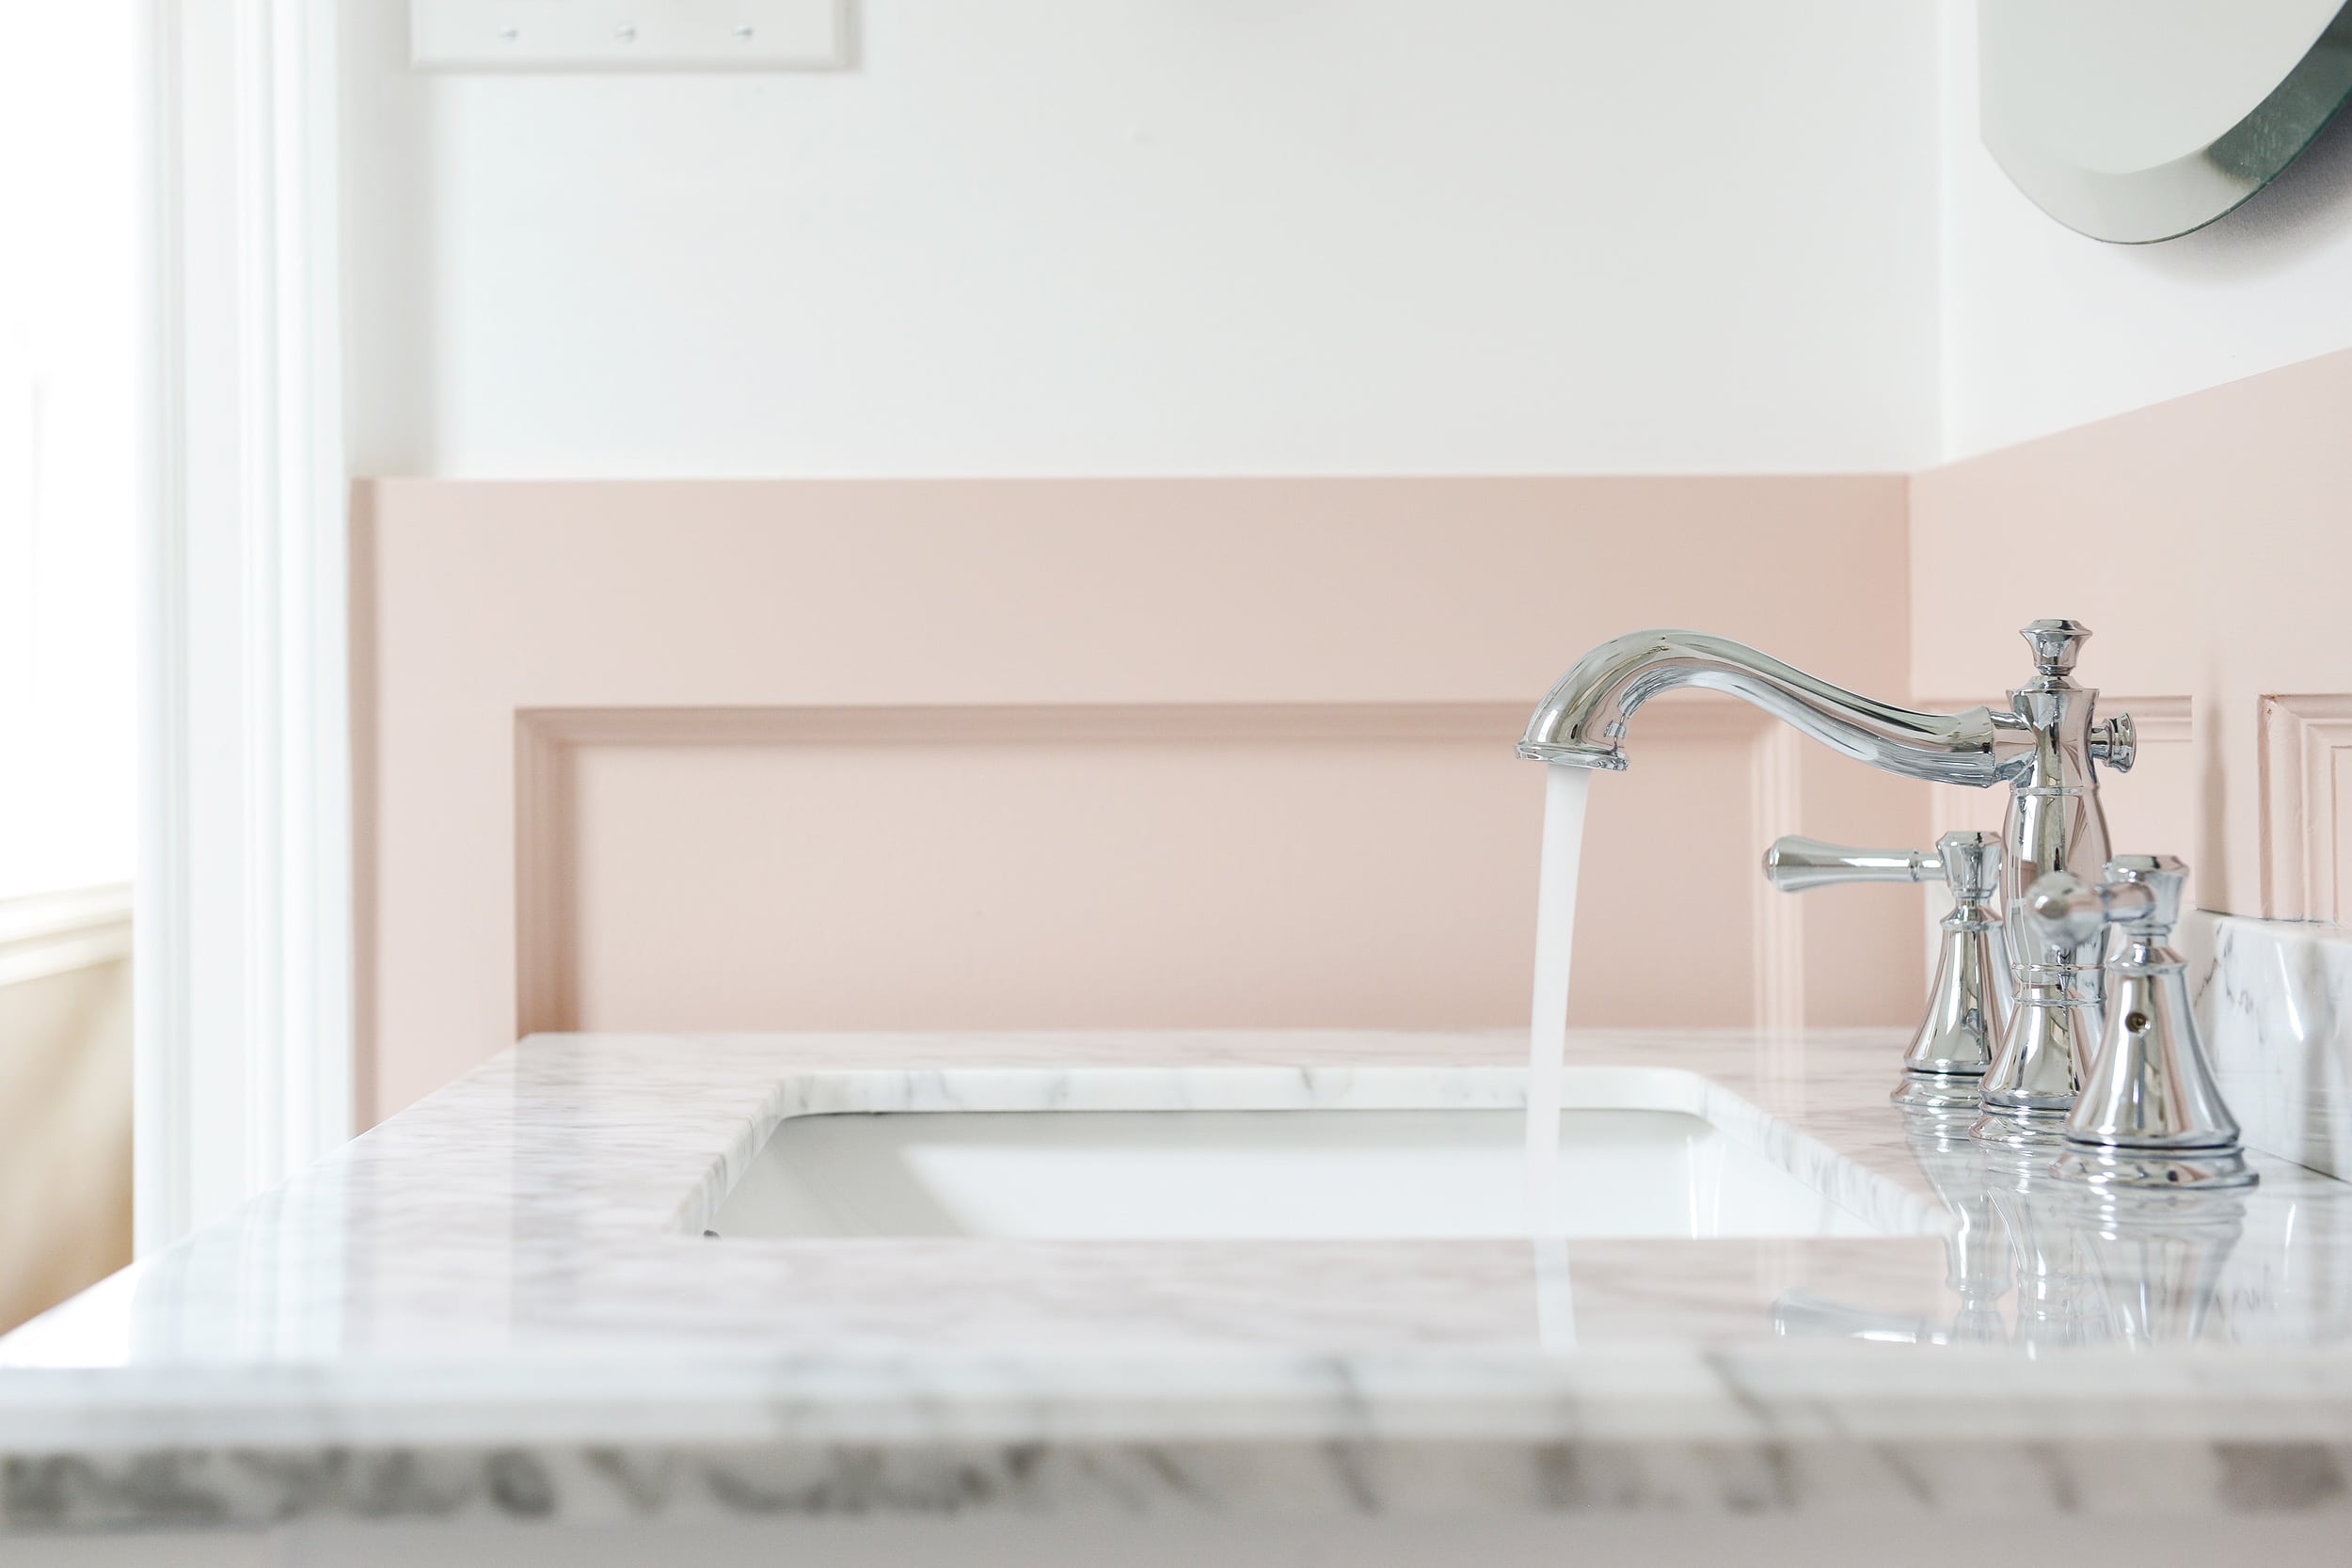 Simple 5 step bathroom vanity installation | how to install a bathroom vanity and faucet | via Yellow Brick Home